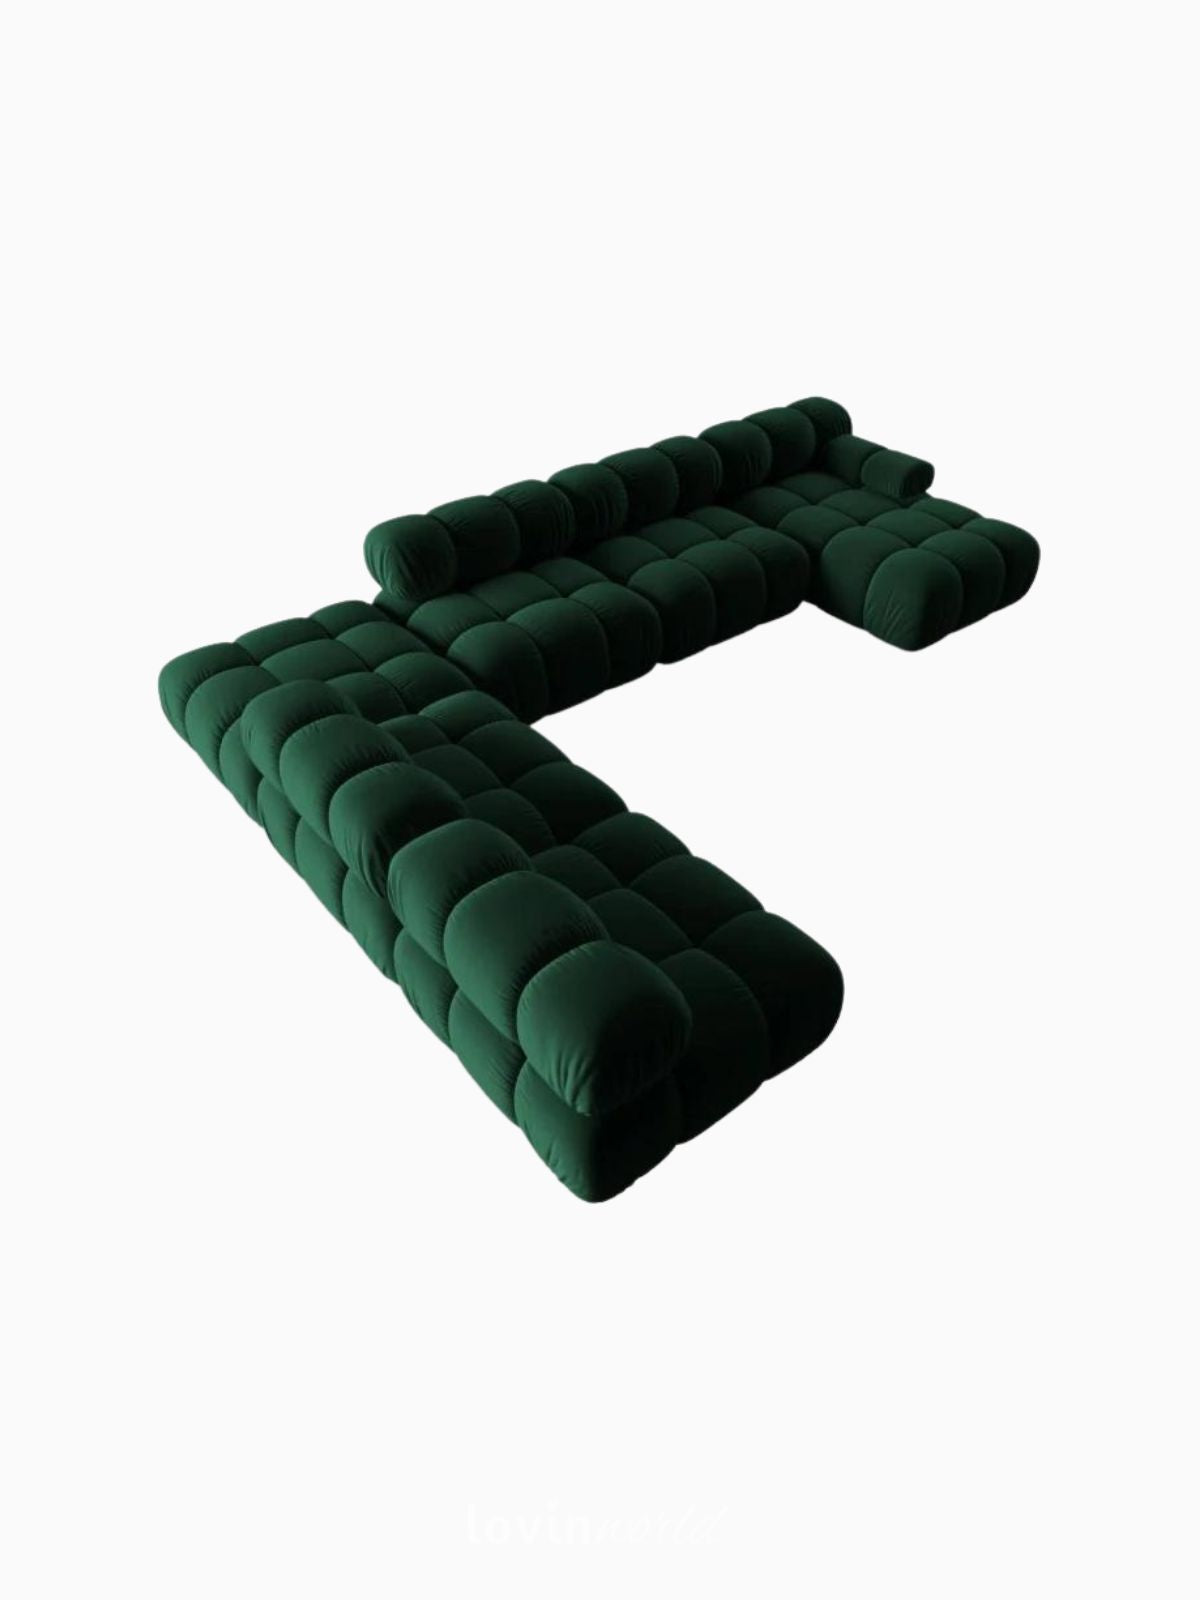 Divano modulare 7 posti Bellis in velluto, colore verde-3